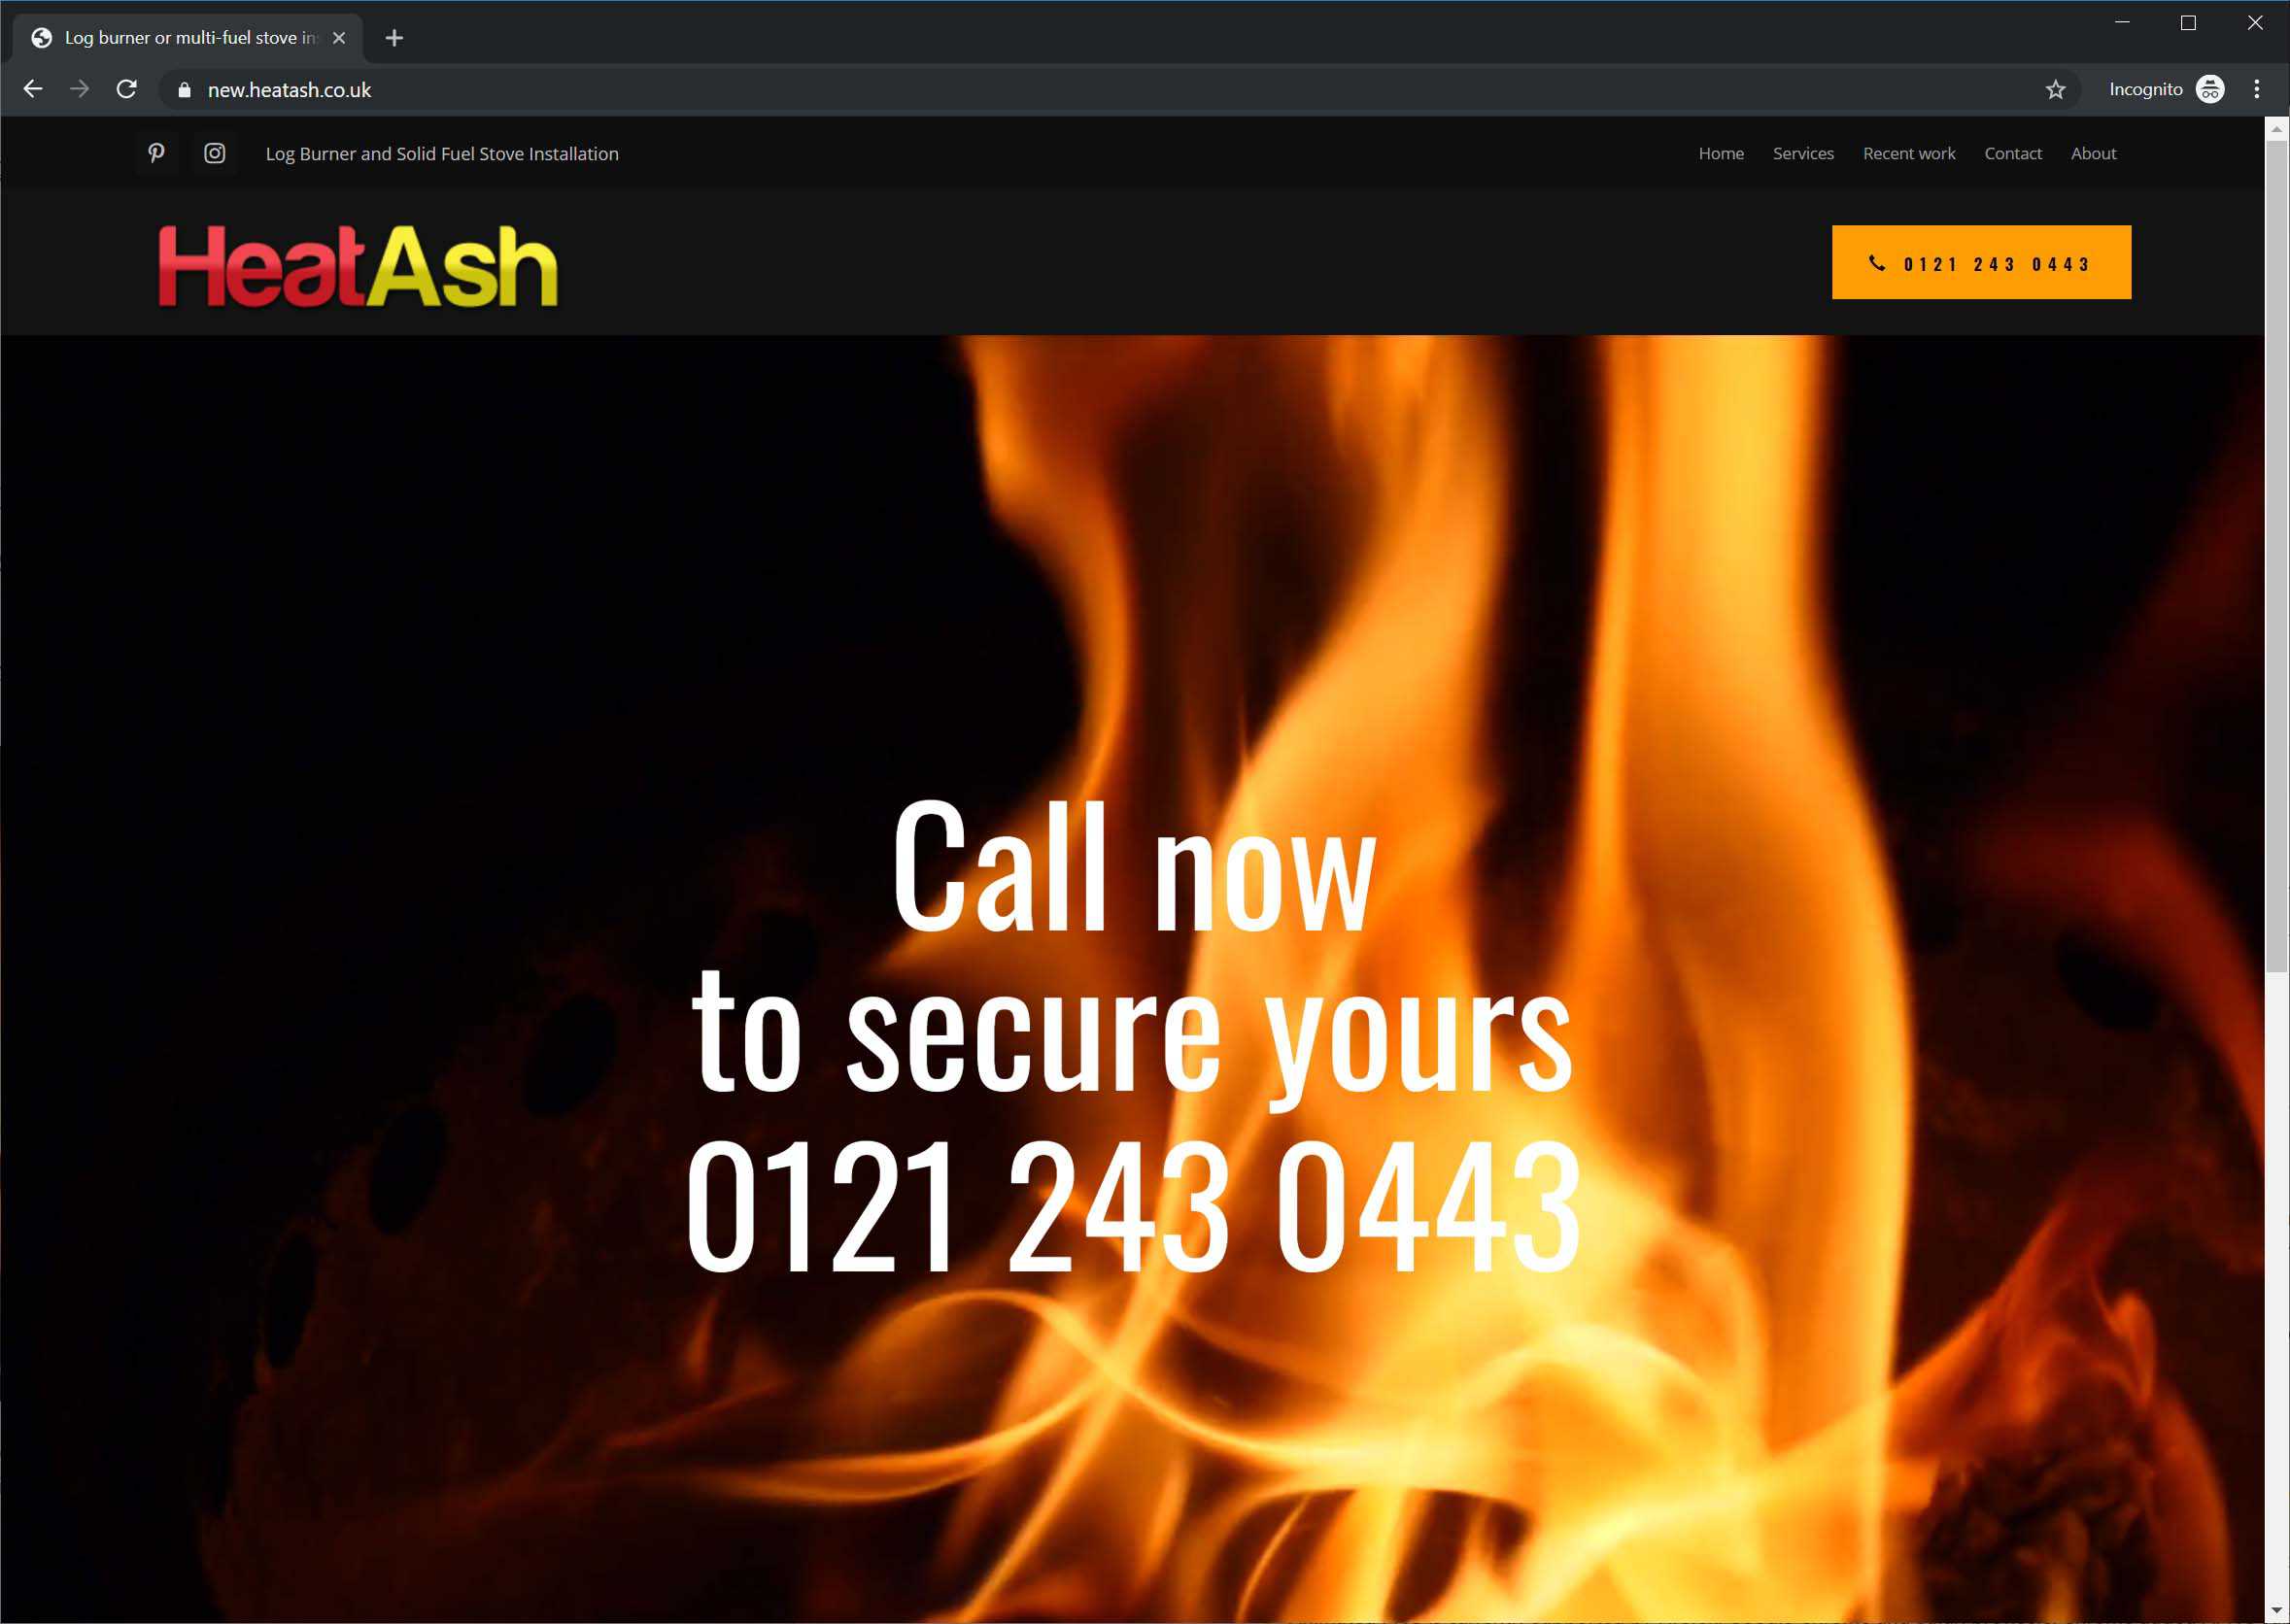 HeatAsh log burner website main page with fire background